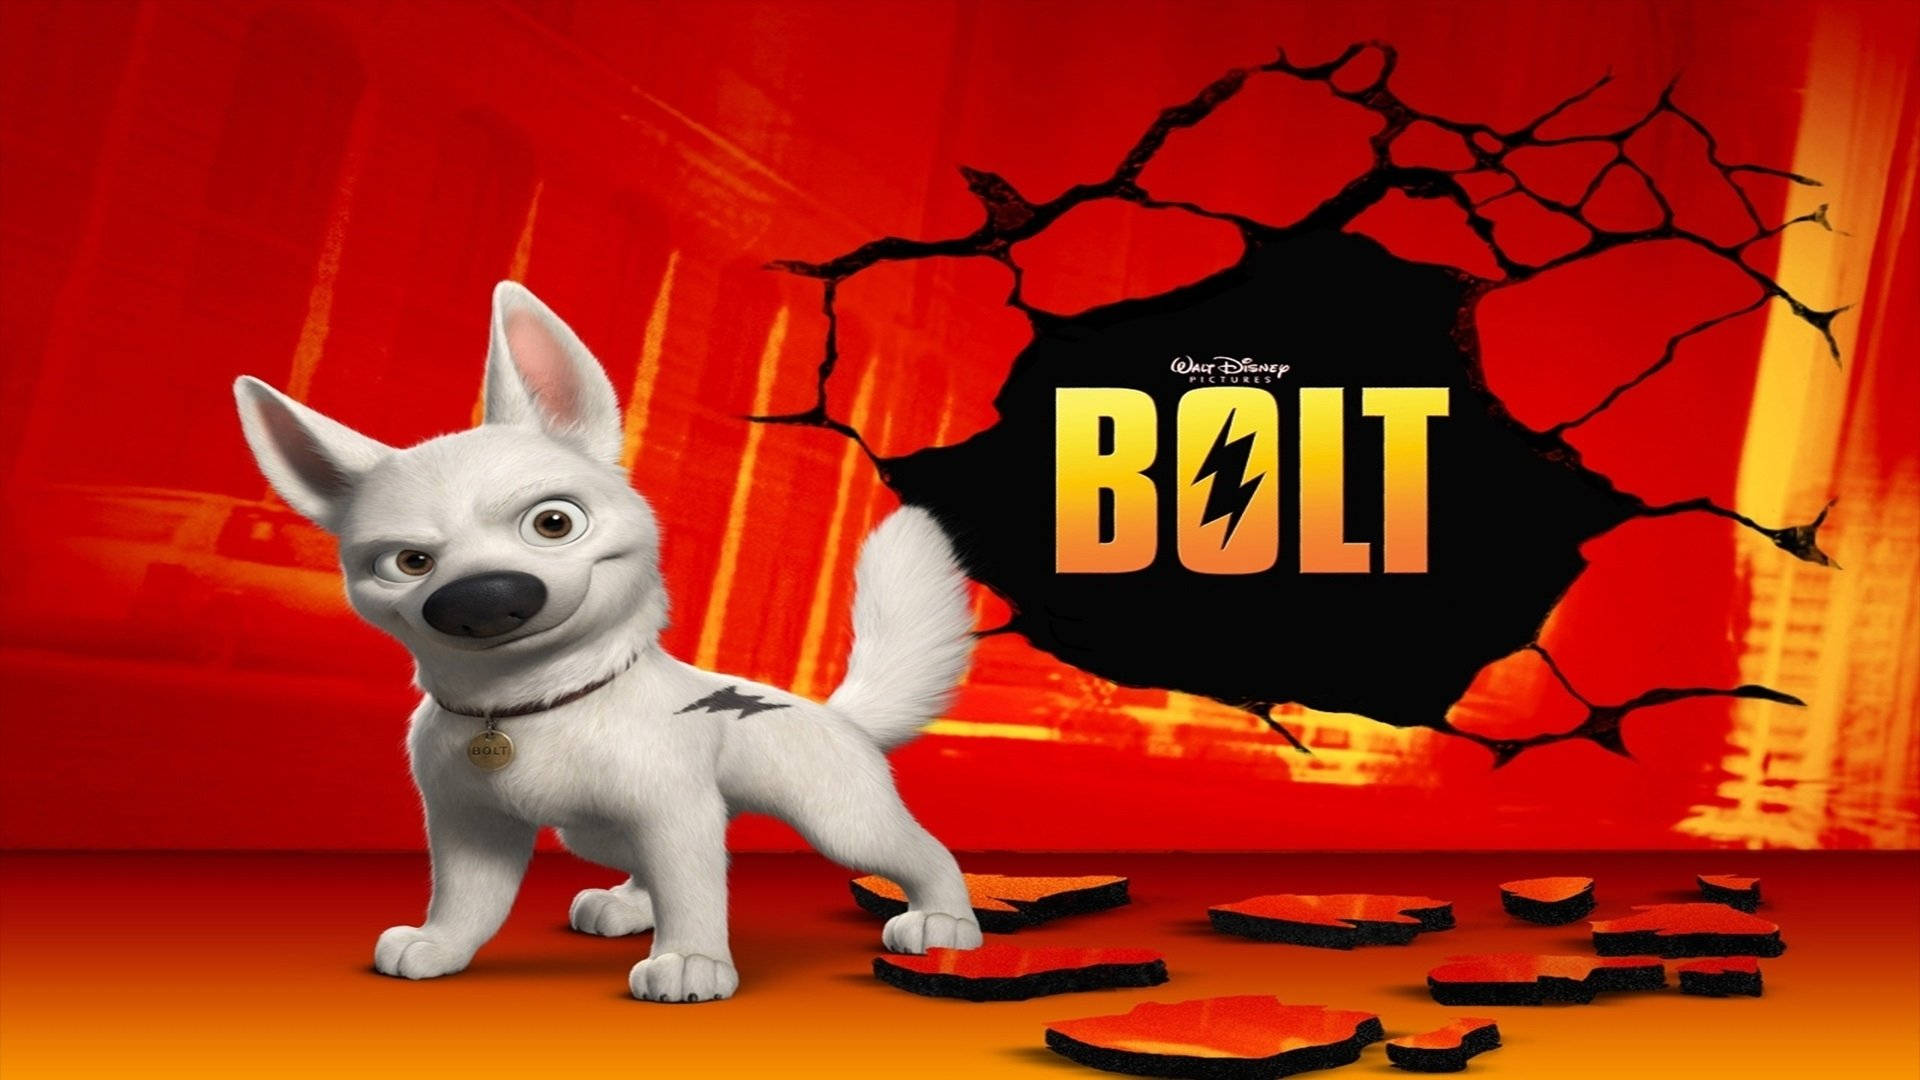 Bolt Background